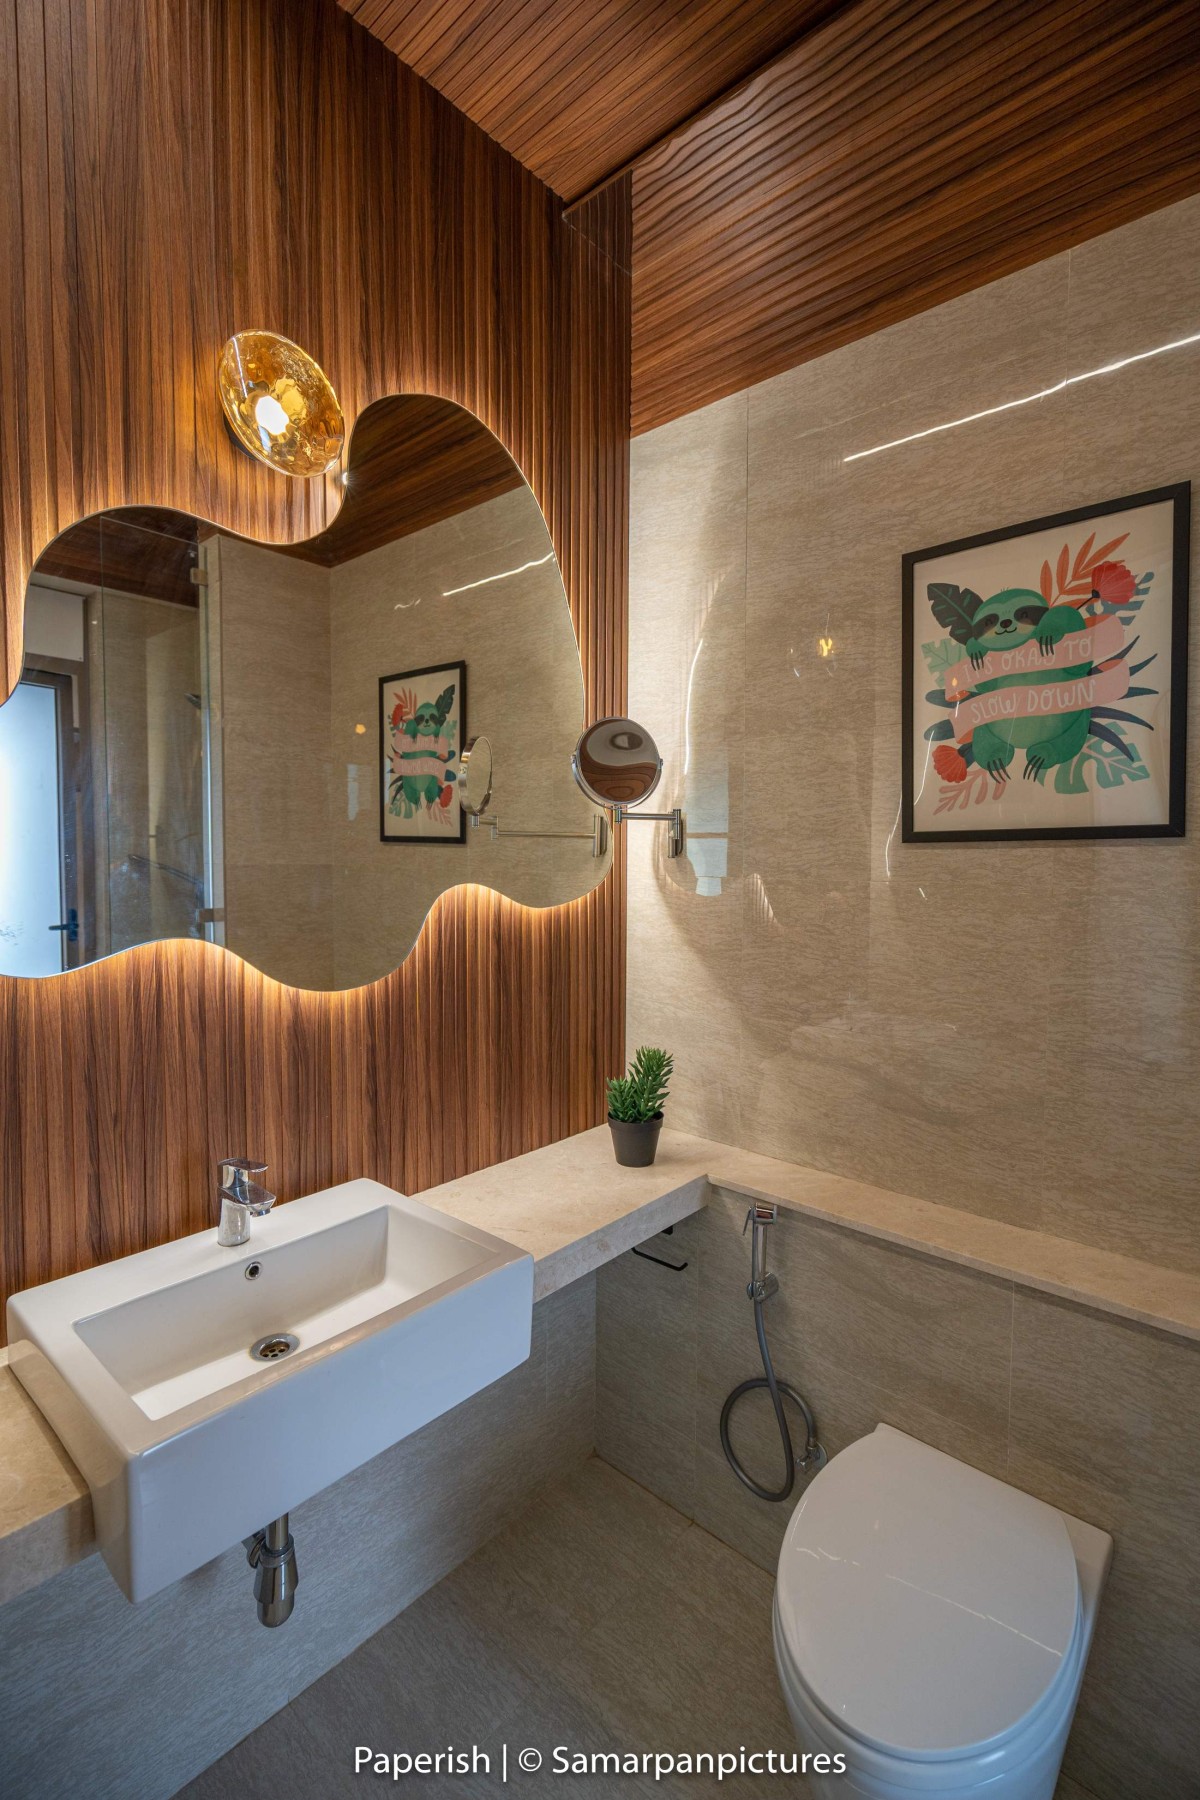 Bathroom of A Studio House by Paperish, a design studio